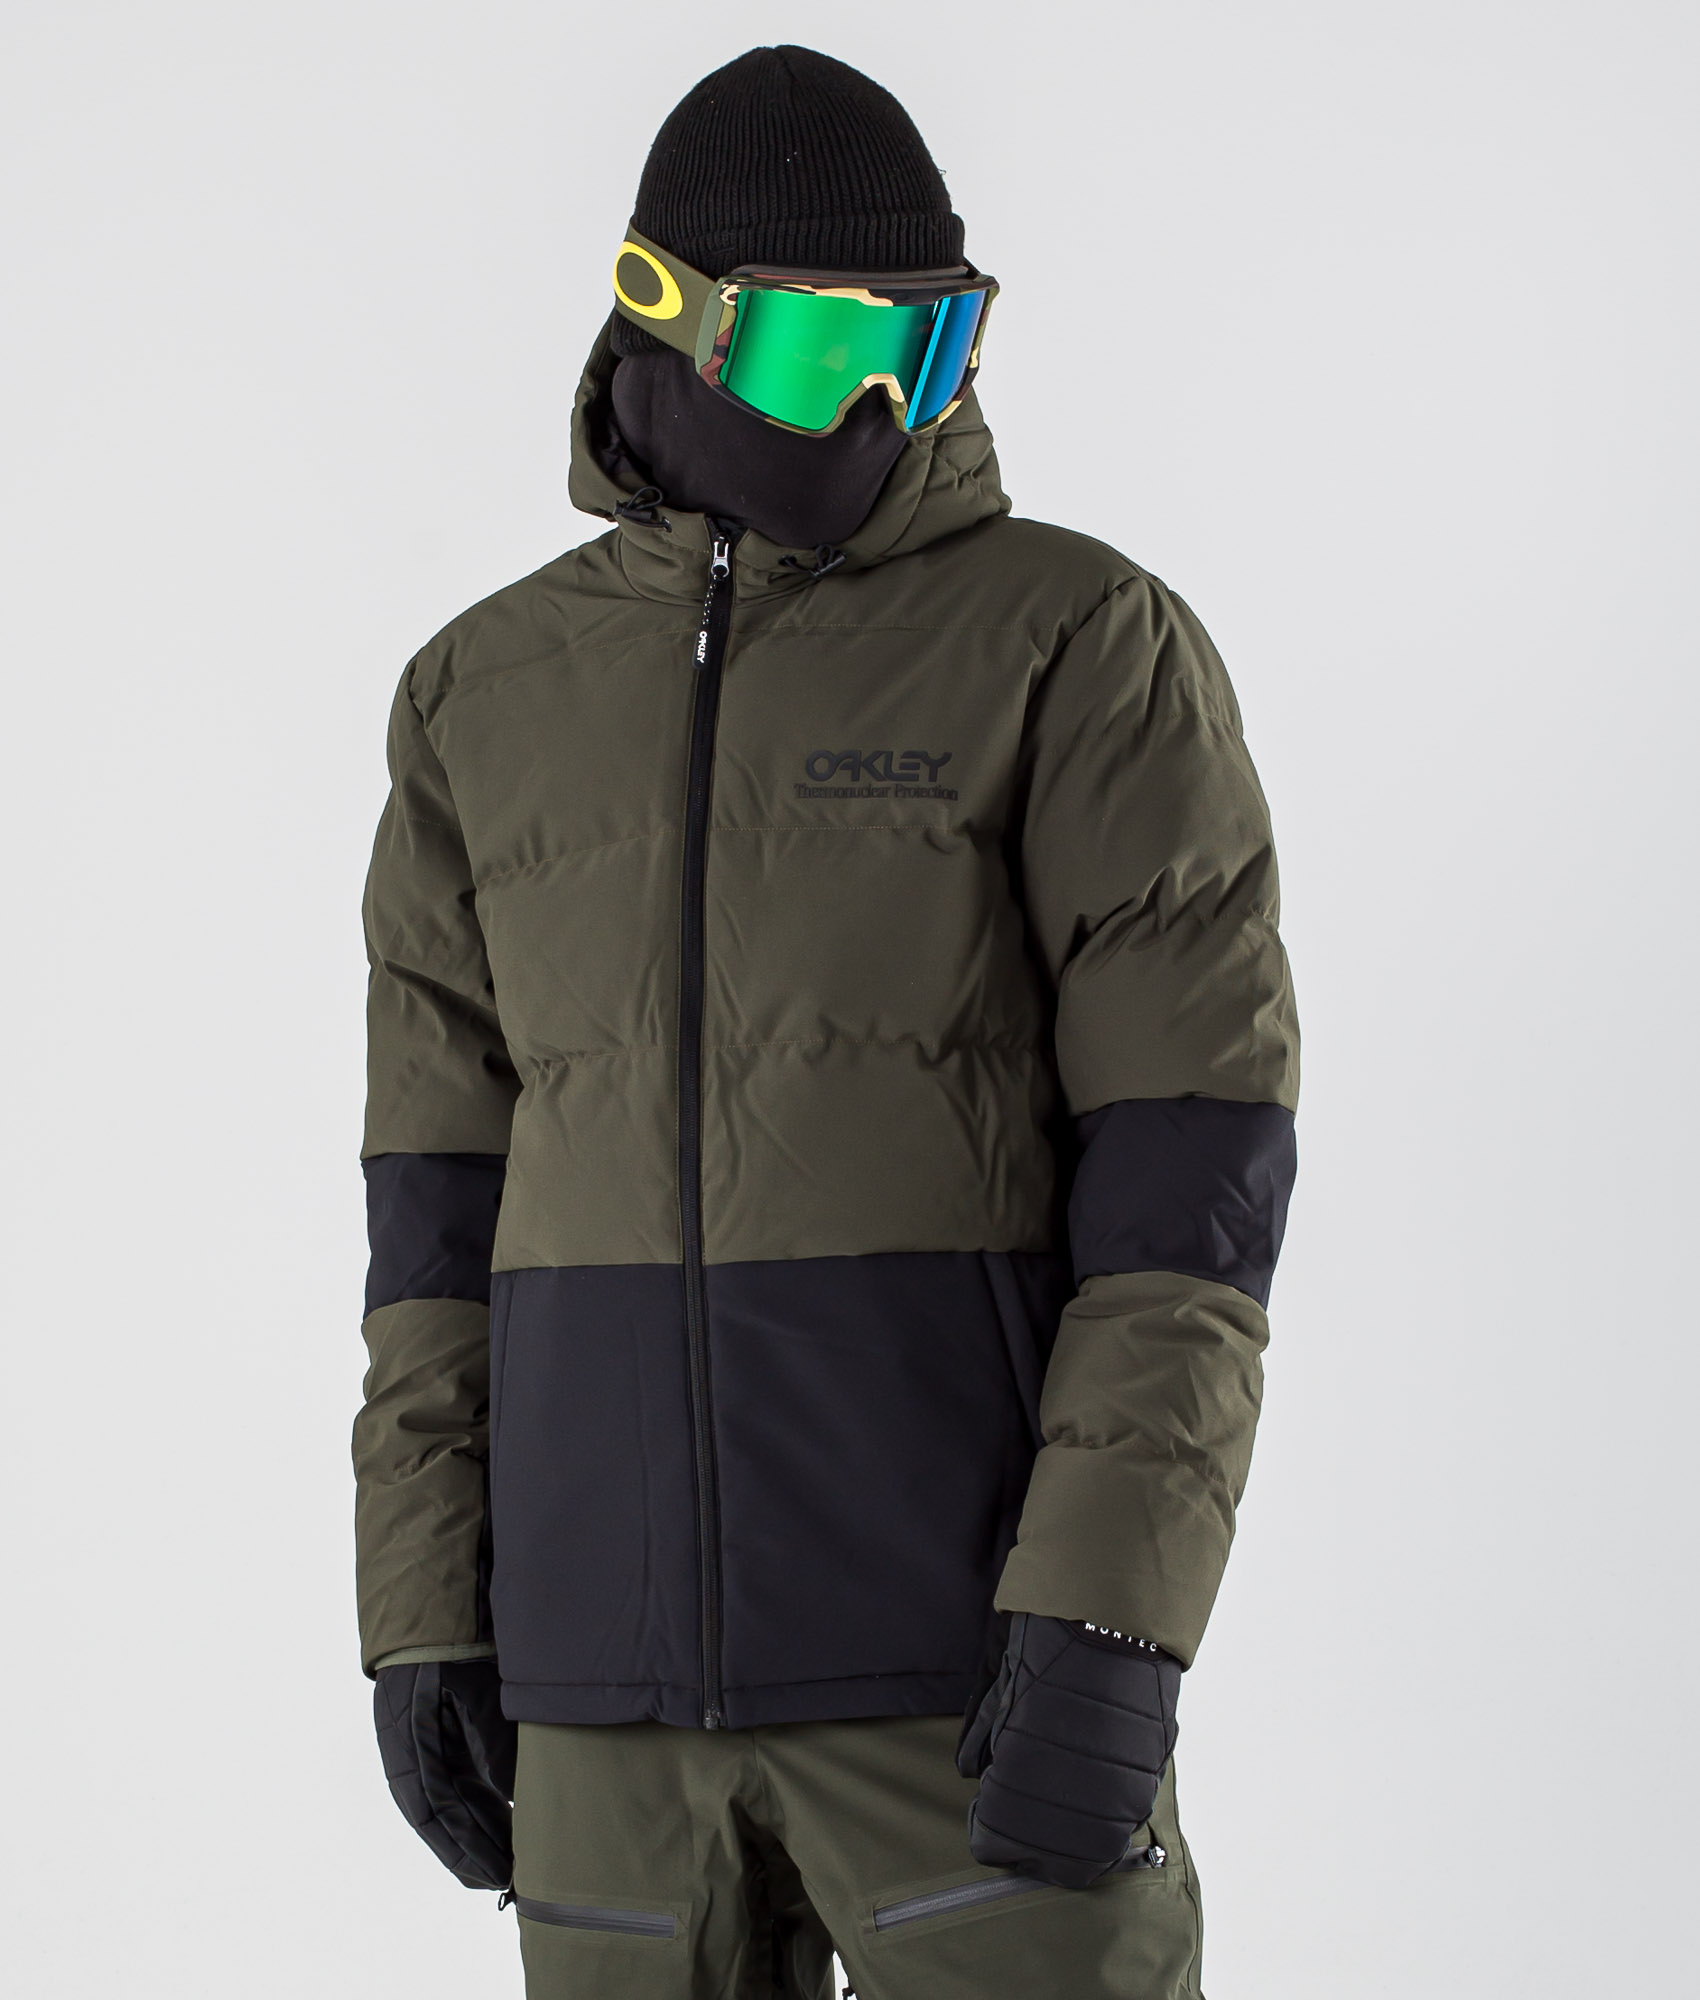 Aprender acerca 33+ imagen oakley green snowboard jacket - Abzlocal.mx